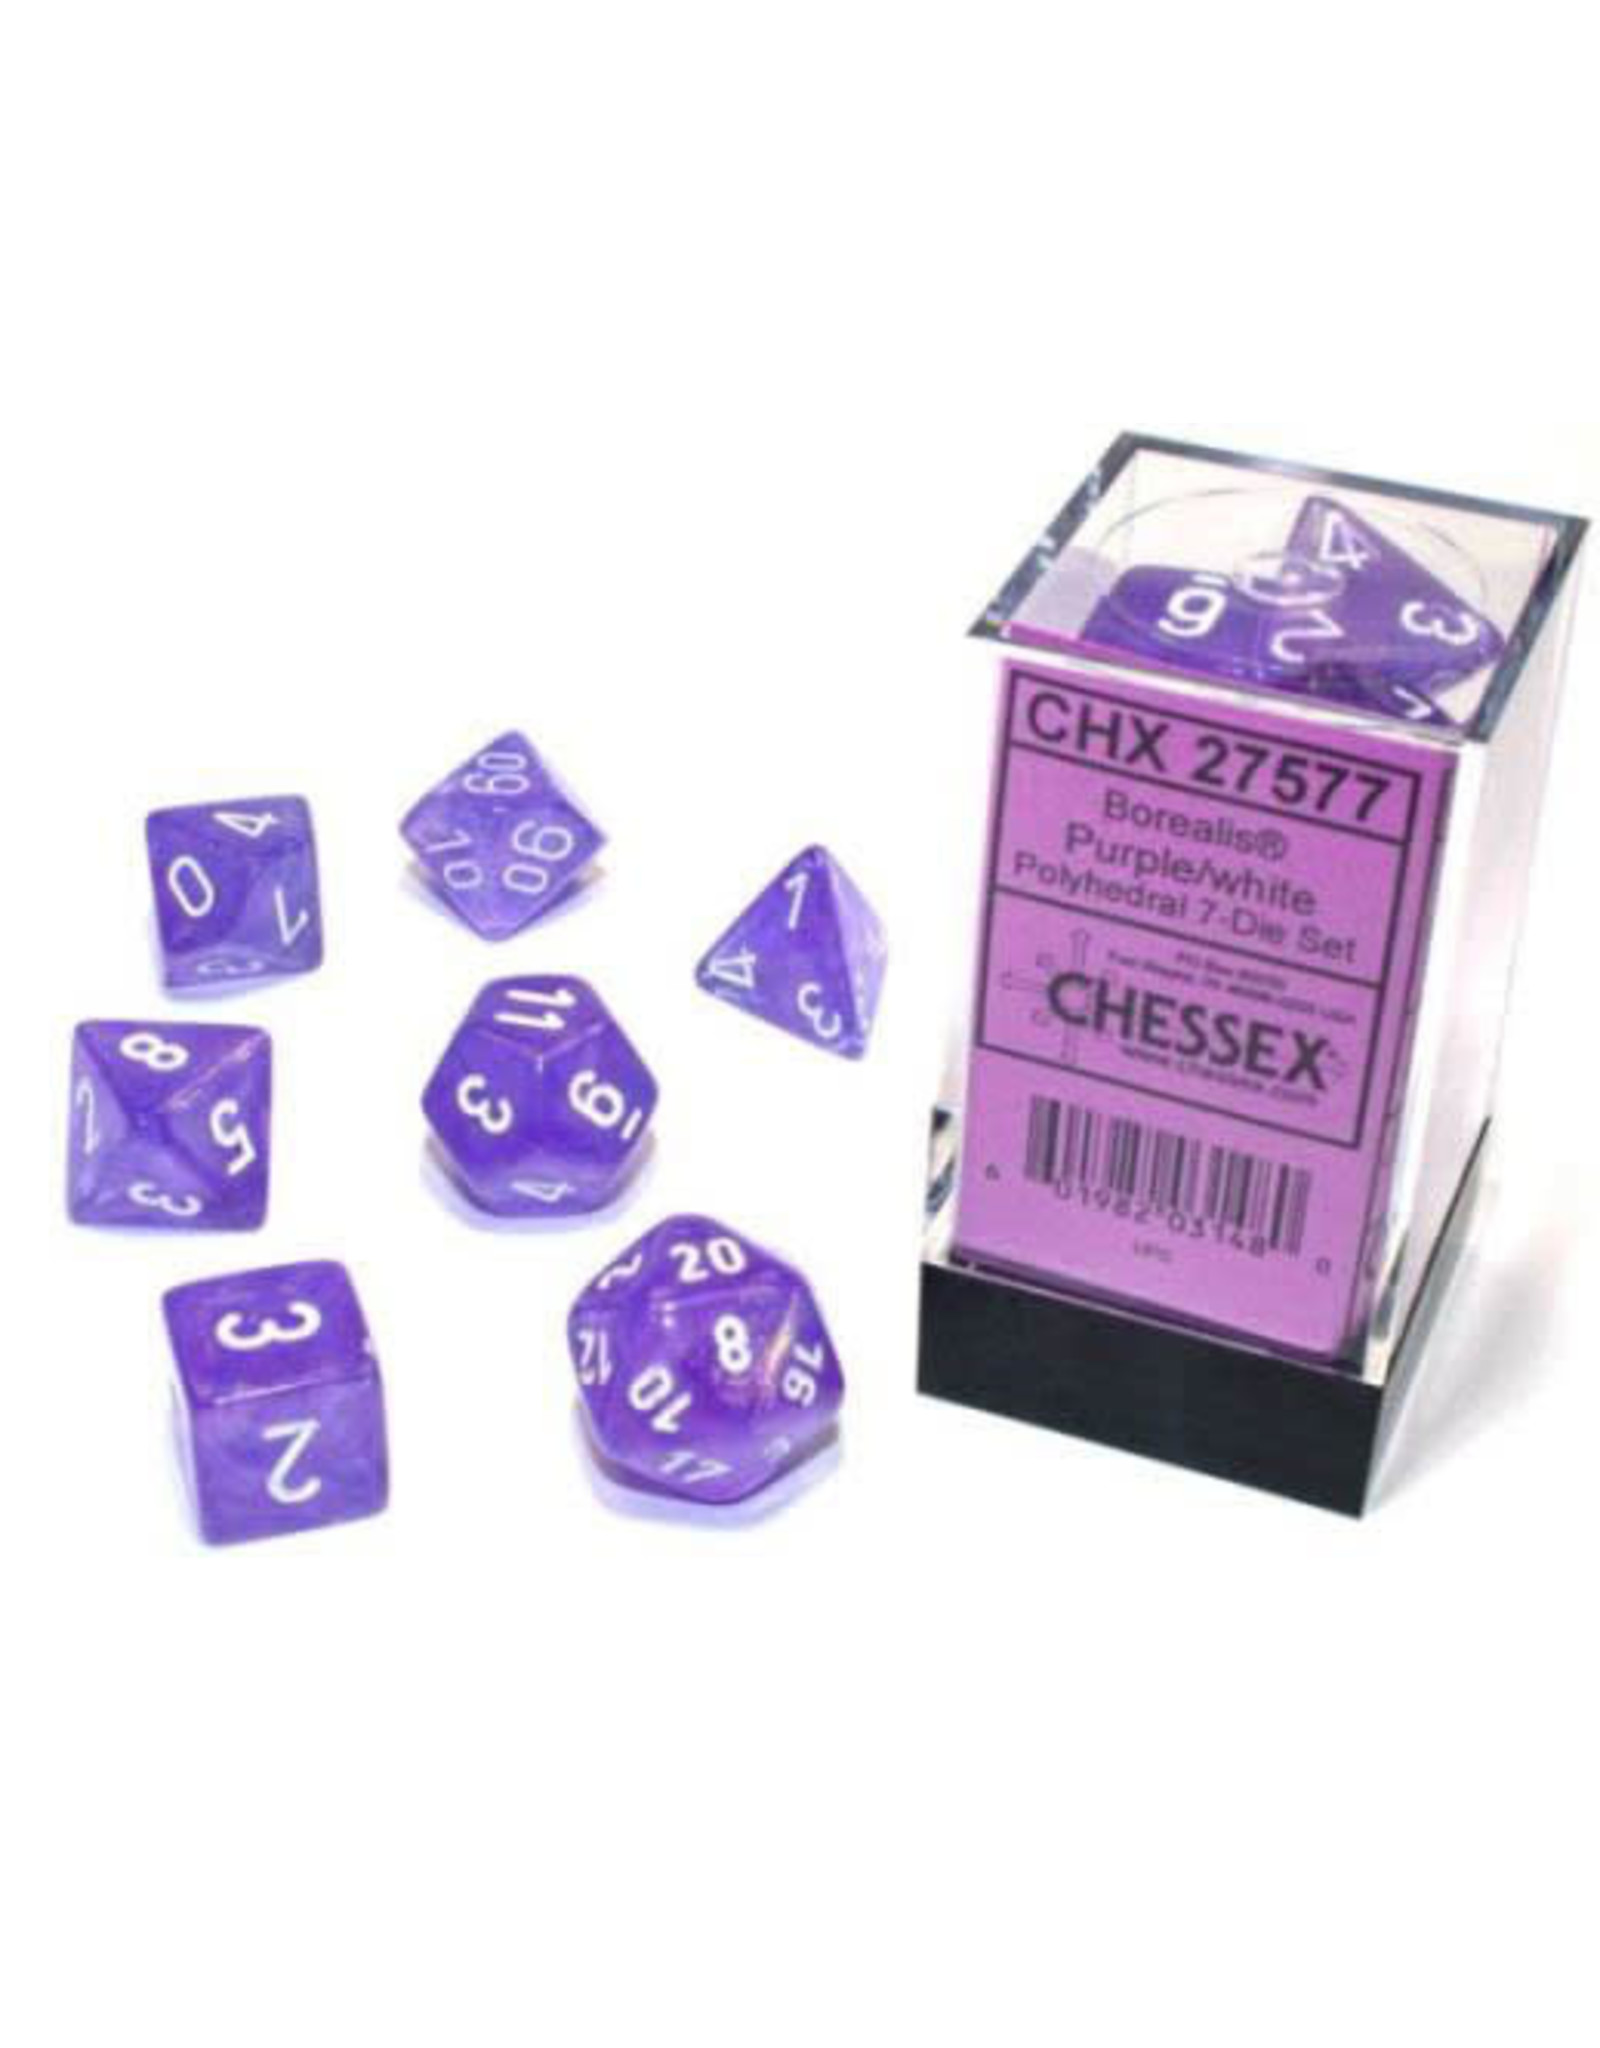 Chessex CHX27577 Borealis: Polyhedral Purple/white Luminary 7-Die Set